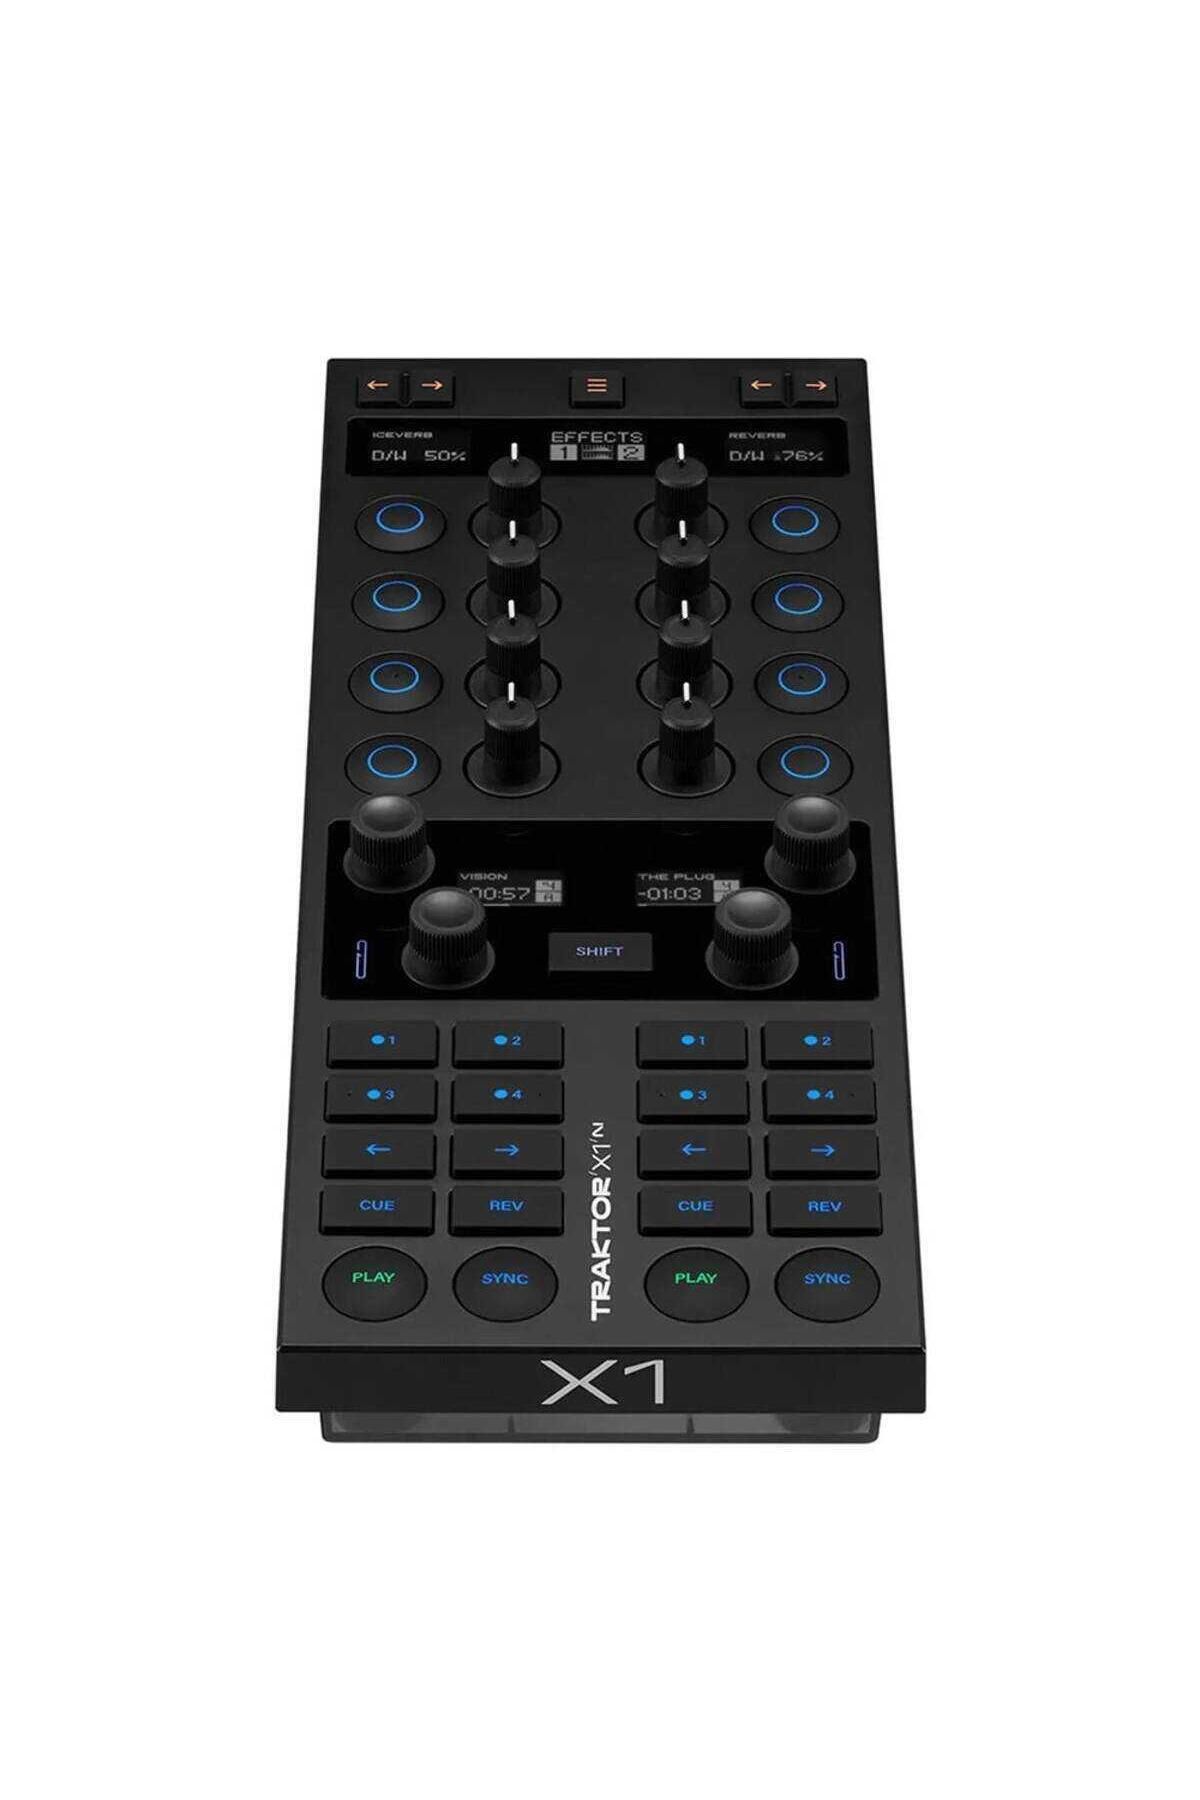 NATIVE INSTRUMENTS Traktor Kontrol X1 MK3 Moduler USB DJ Controller